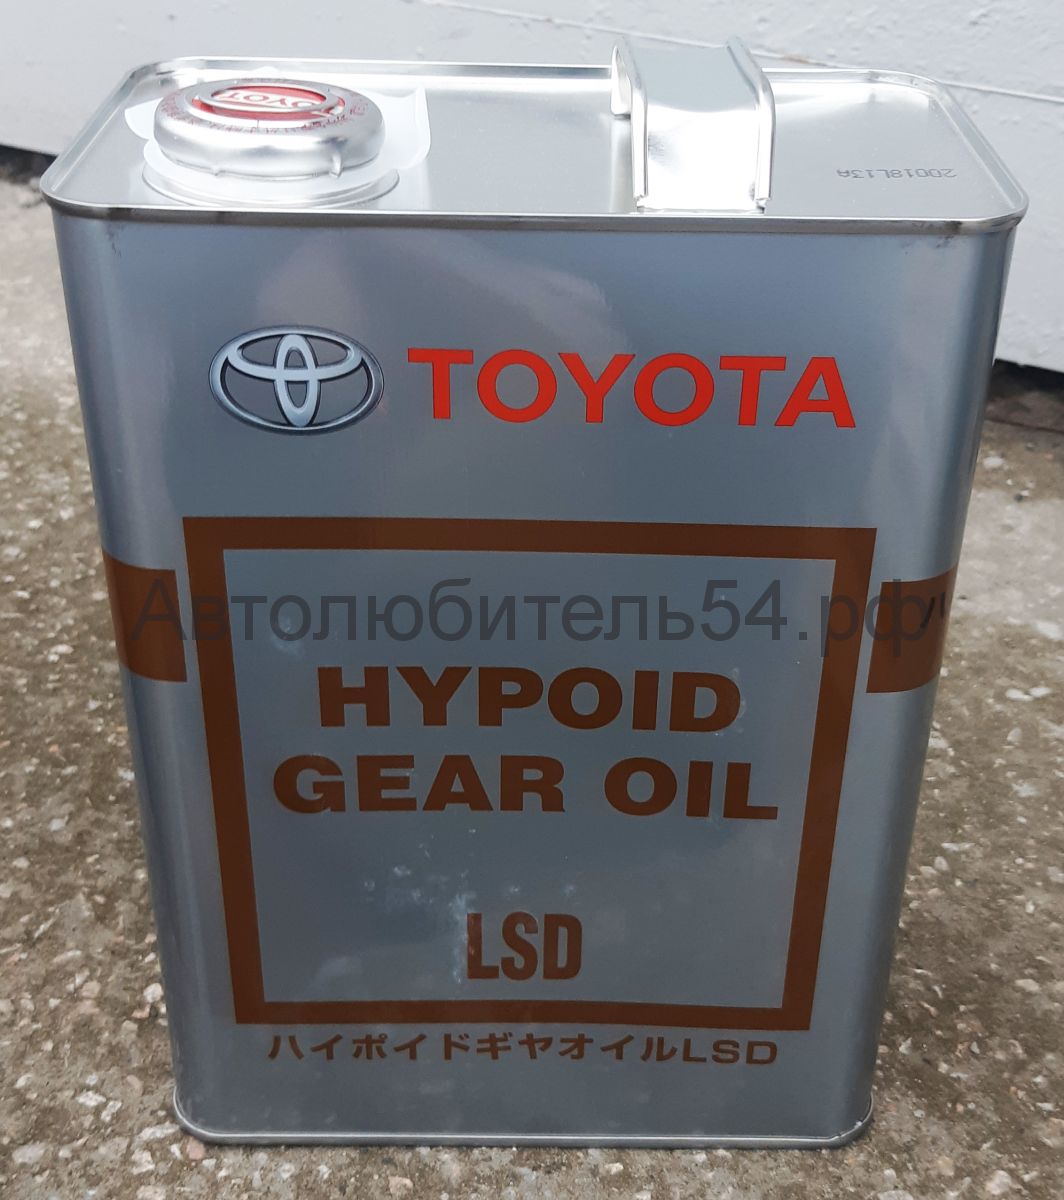 Масло 85w 90. Toyota Gear Oil 75w-90. Масло трансмиссионное Toyota Hypoid Gear Oil LSD/ 4 Л.. Toyota Gear Oil 85w-90 gl-5. Toyota Gear Oil super gl-5 75w-90 Hypoid.